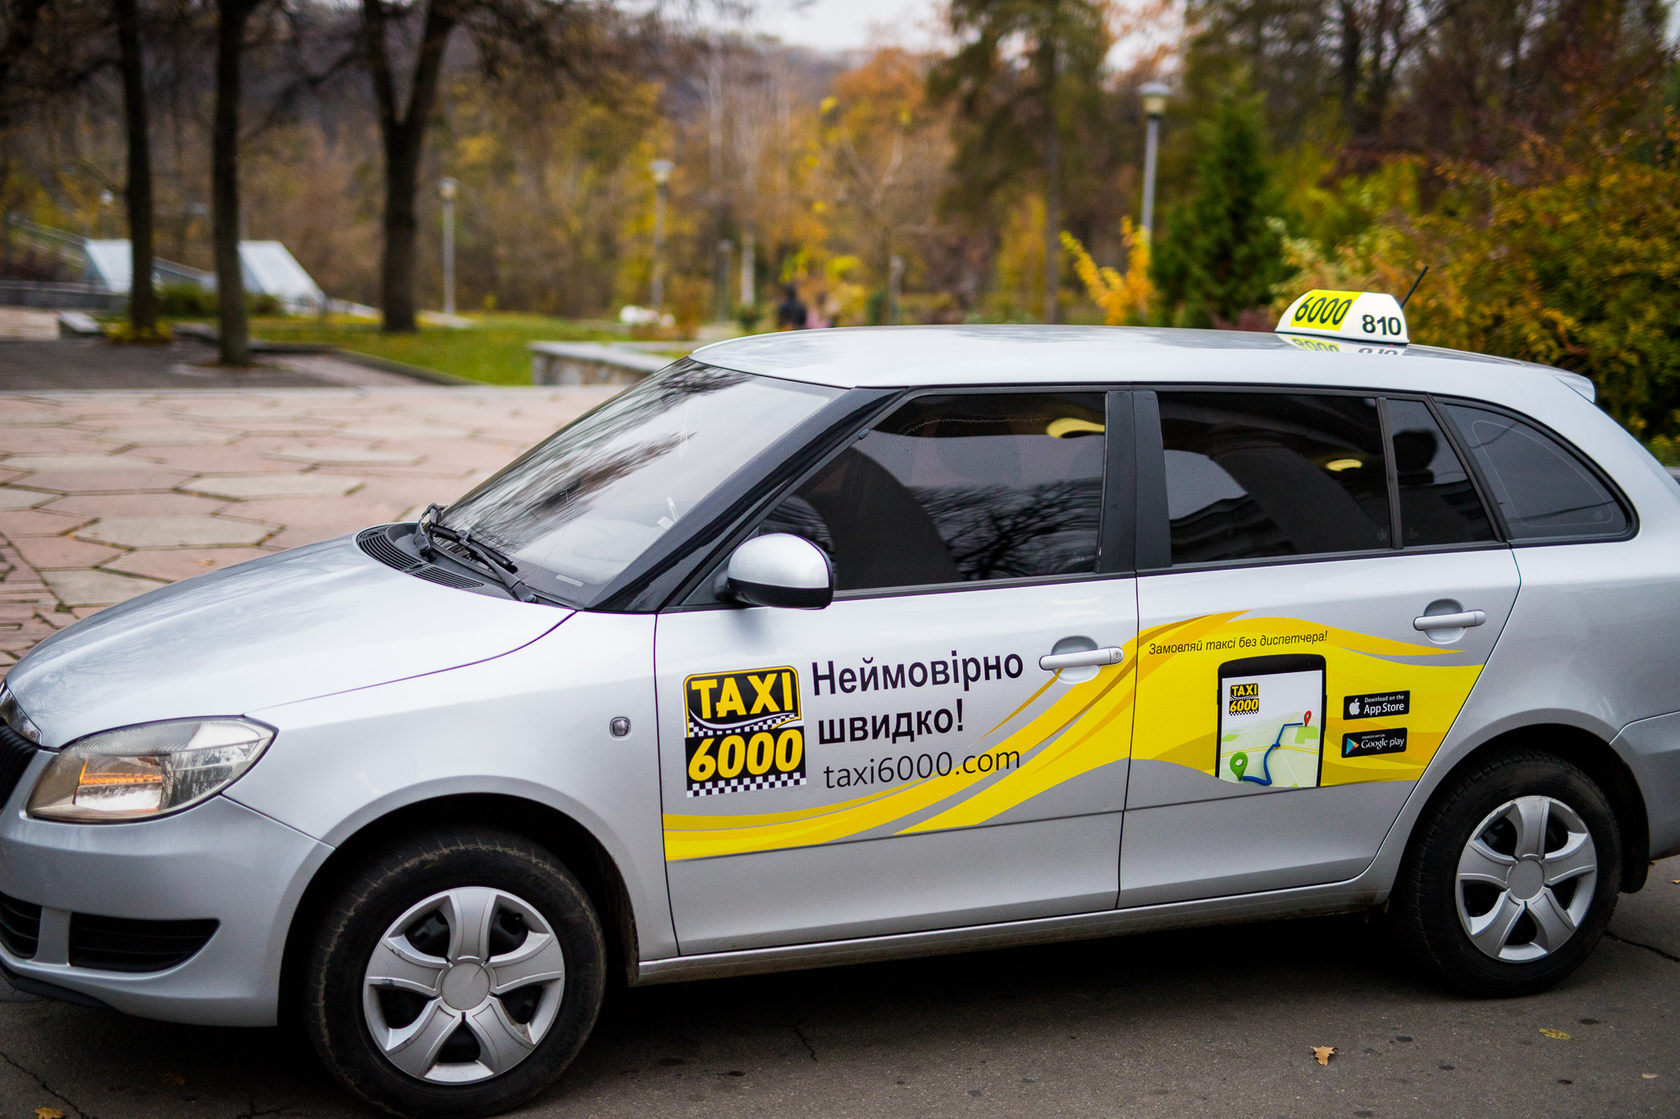 Дешевое такси екатеринбург телефон. Такси десятка. Такси 6000. Такси три десятки. Такси Opti.